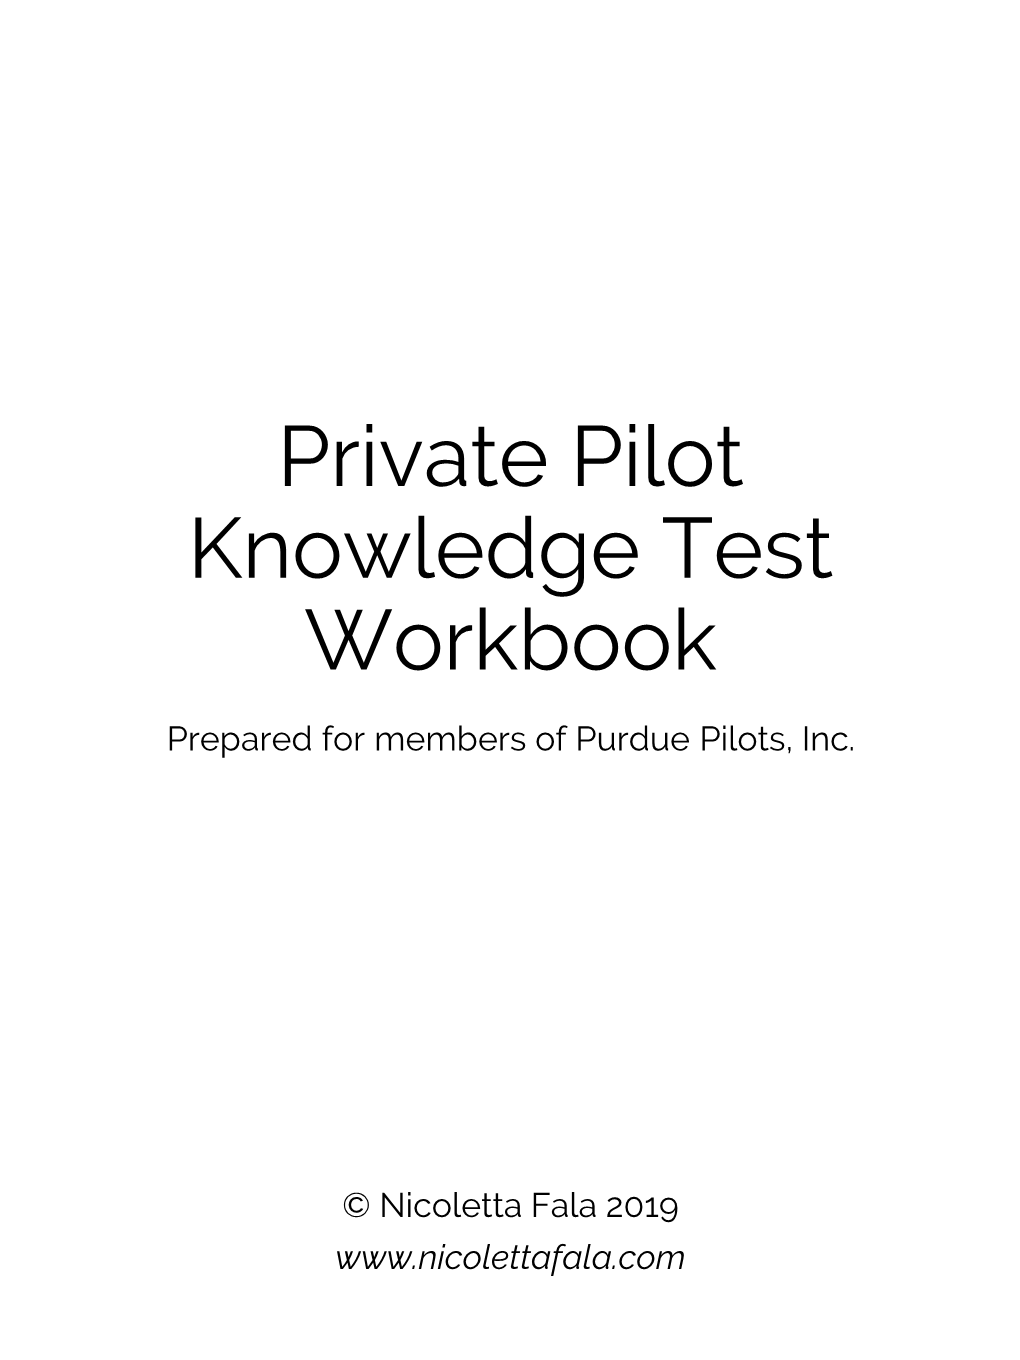 Private Pilot Knowledge Test Workbook